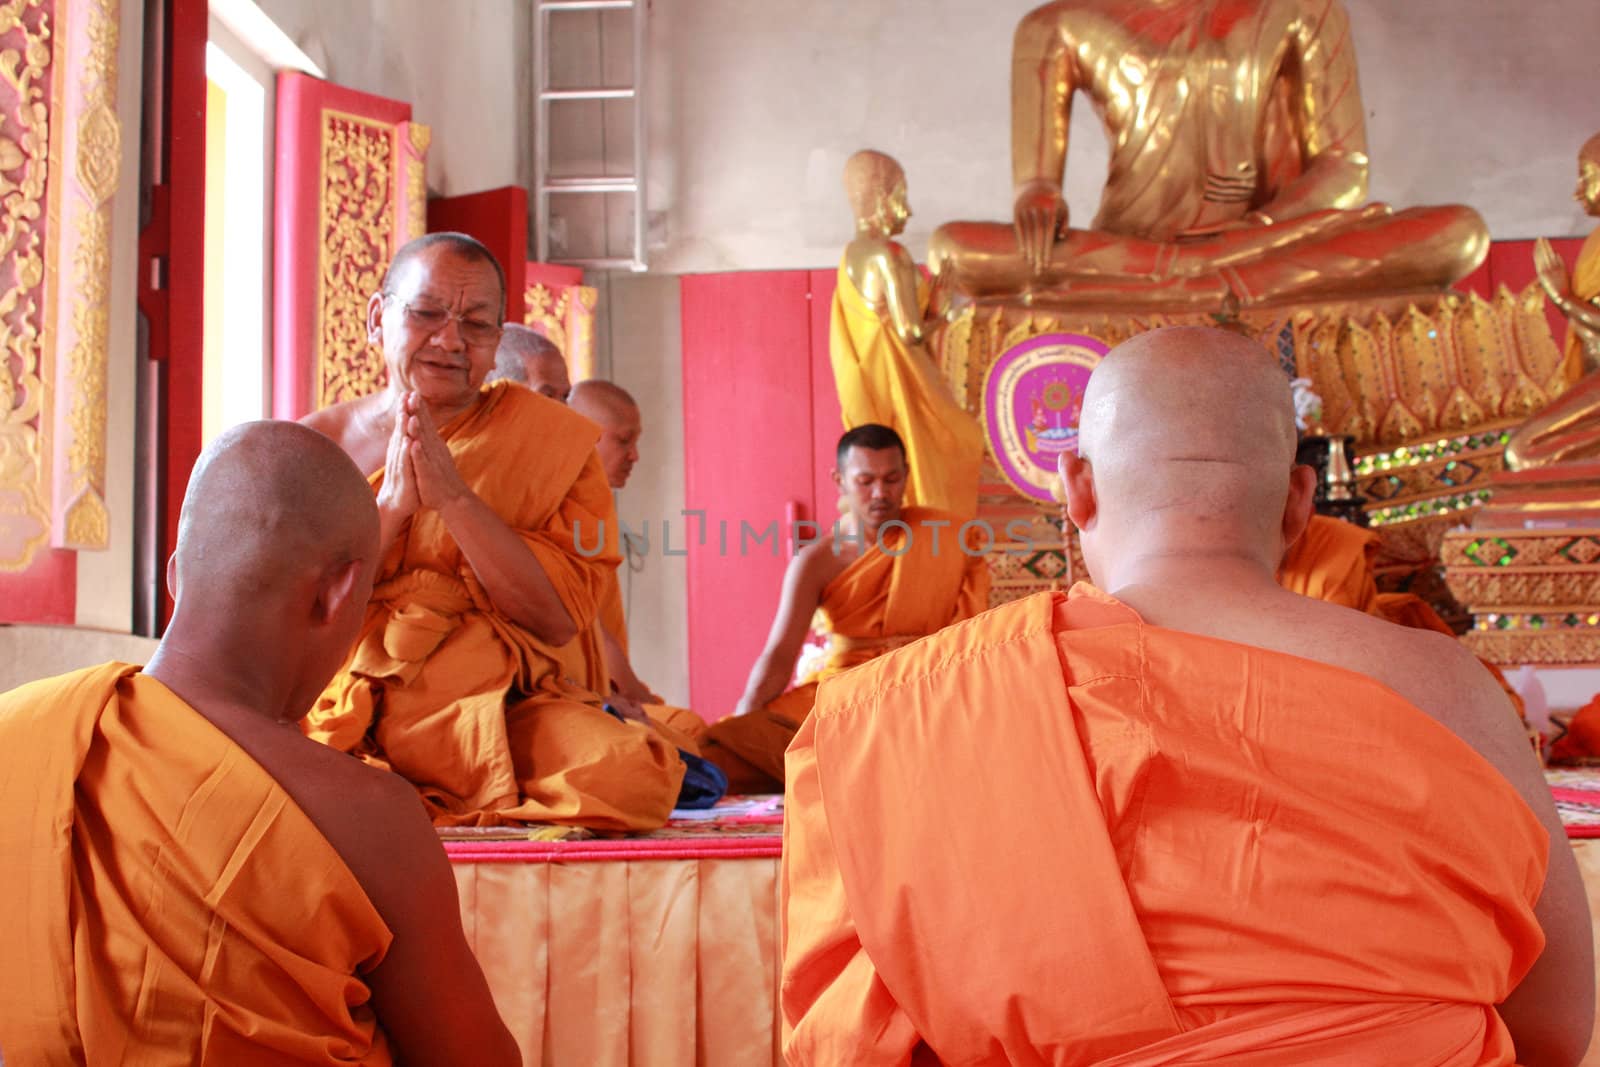 NAKON SI THAMMARAT, THAILAND - NOVEMBER 17 : Clergy Conference in the newly Buddhist ordination ceremony on November 17, 2012 in Nakon Si Thammarat, Thailand.